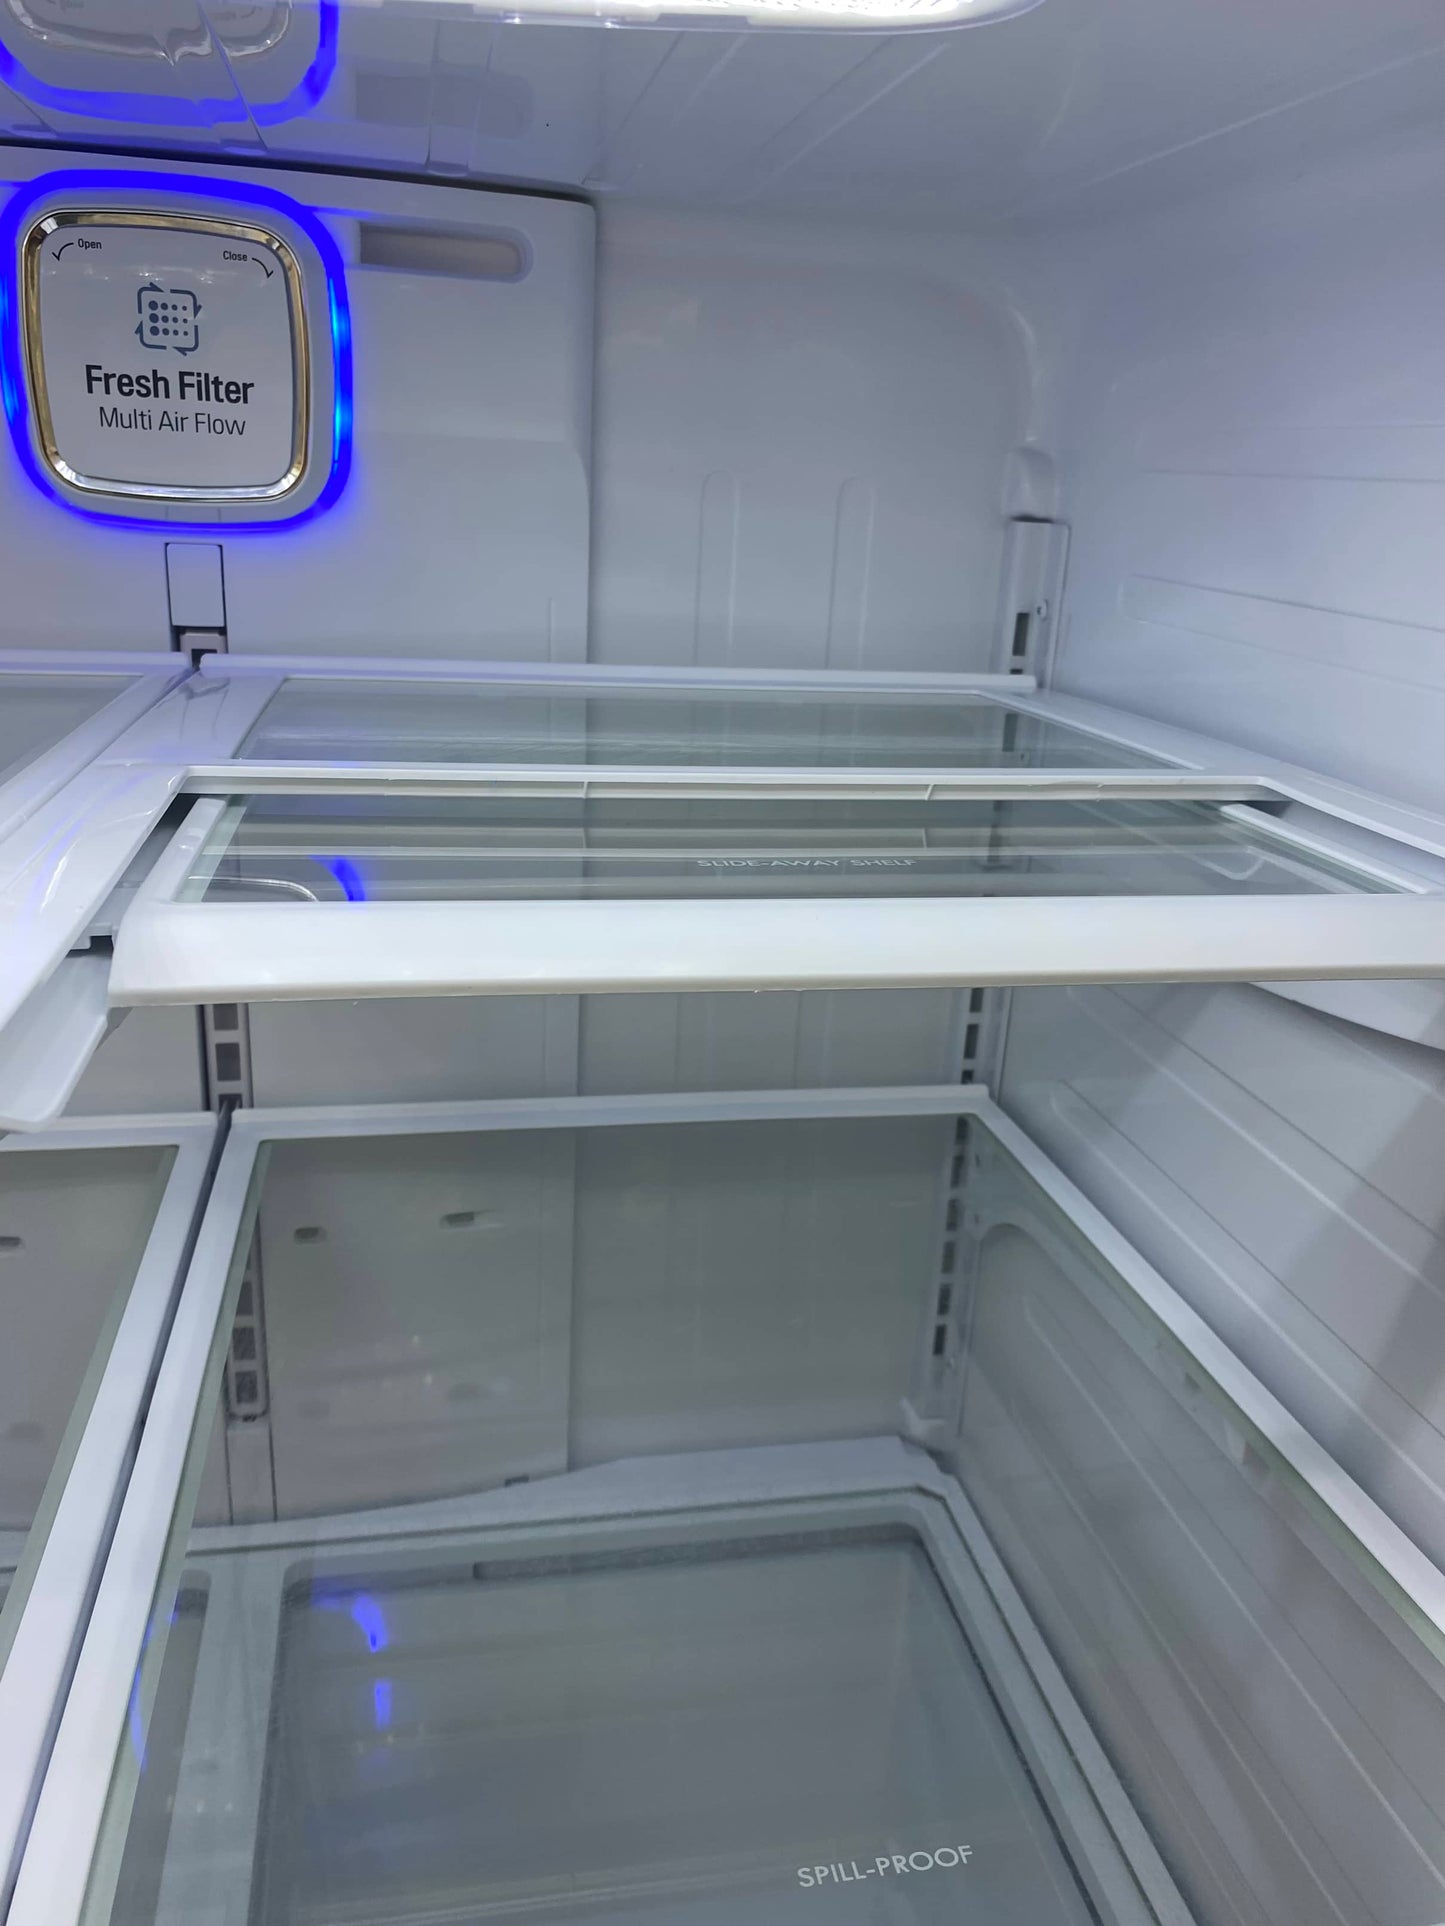 LG French door refrigerator showcase stainless steel w/water ice dispenser 33”